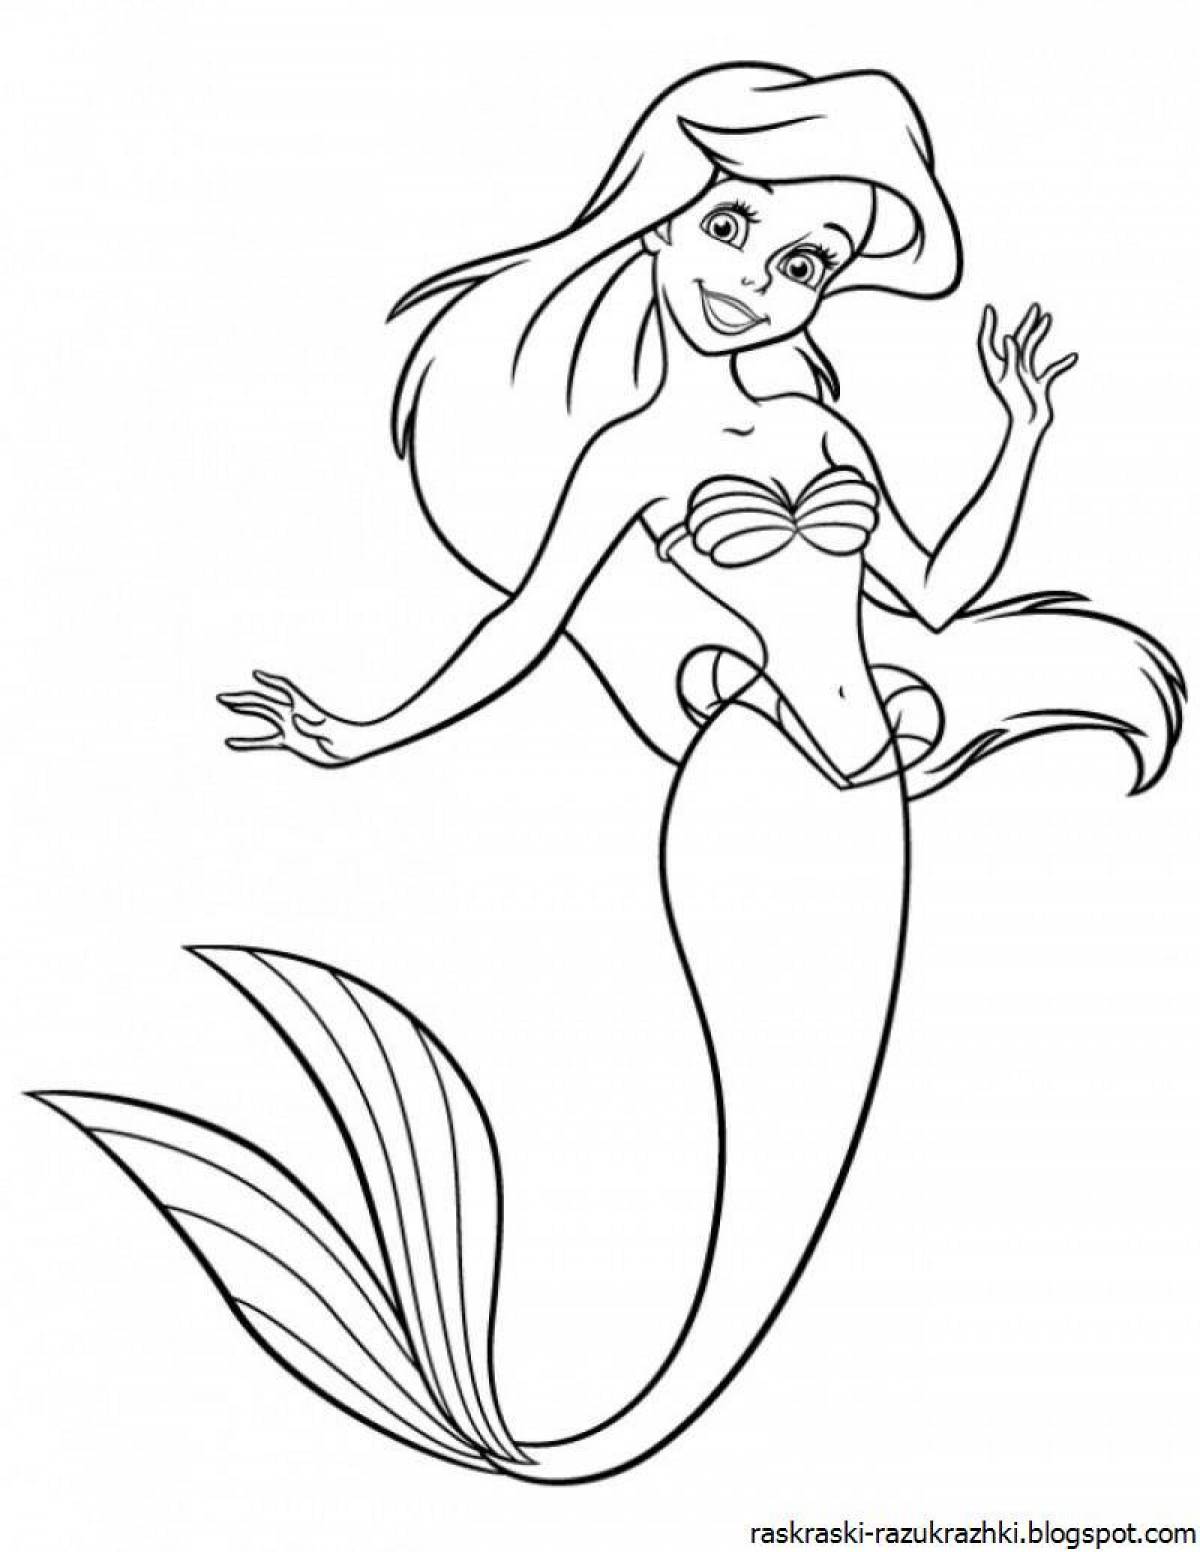 Joyful little mermaid coloring book for kids